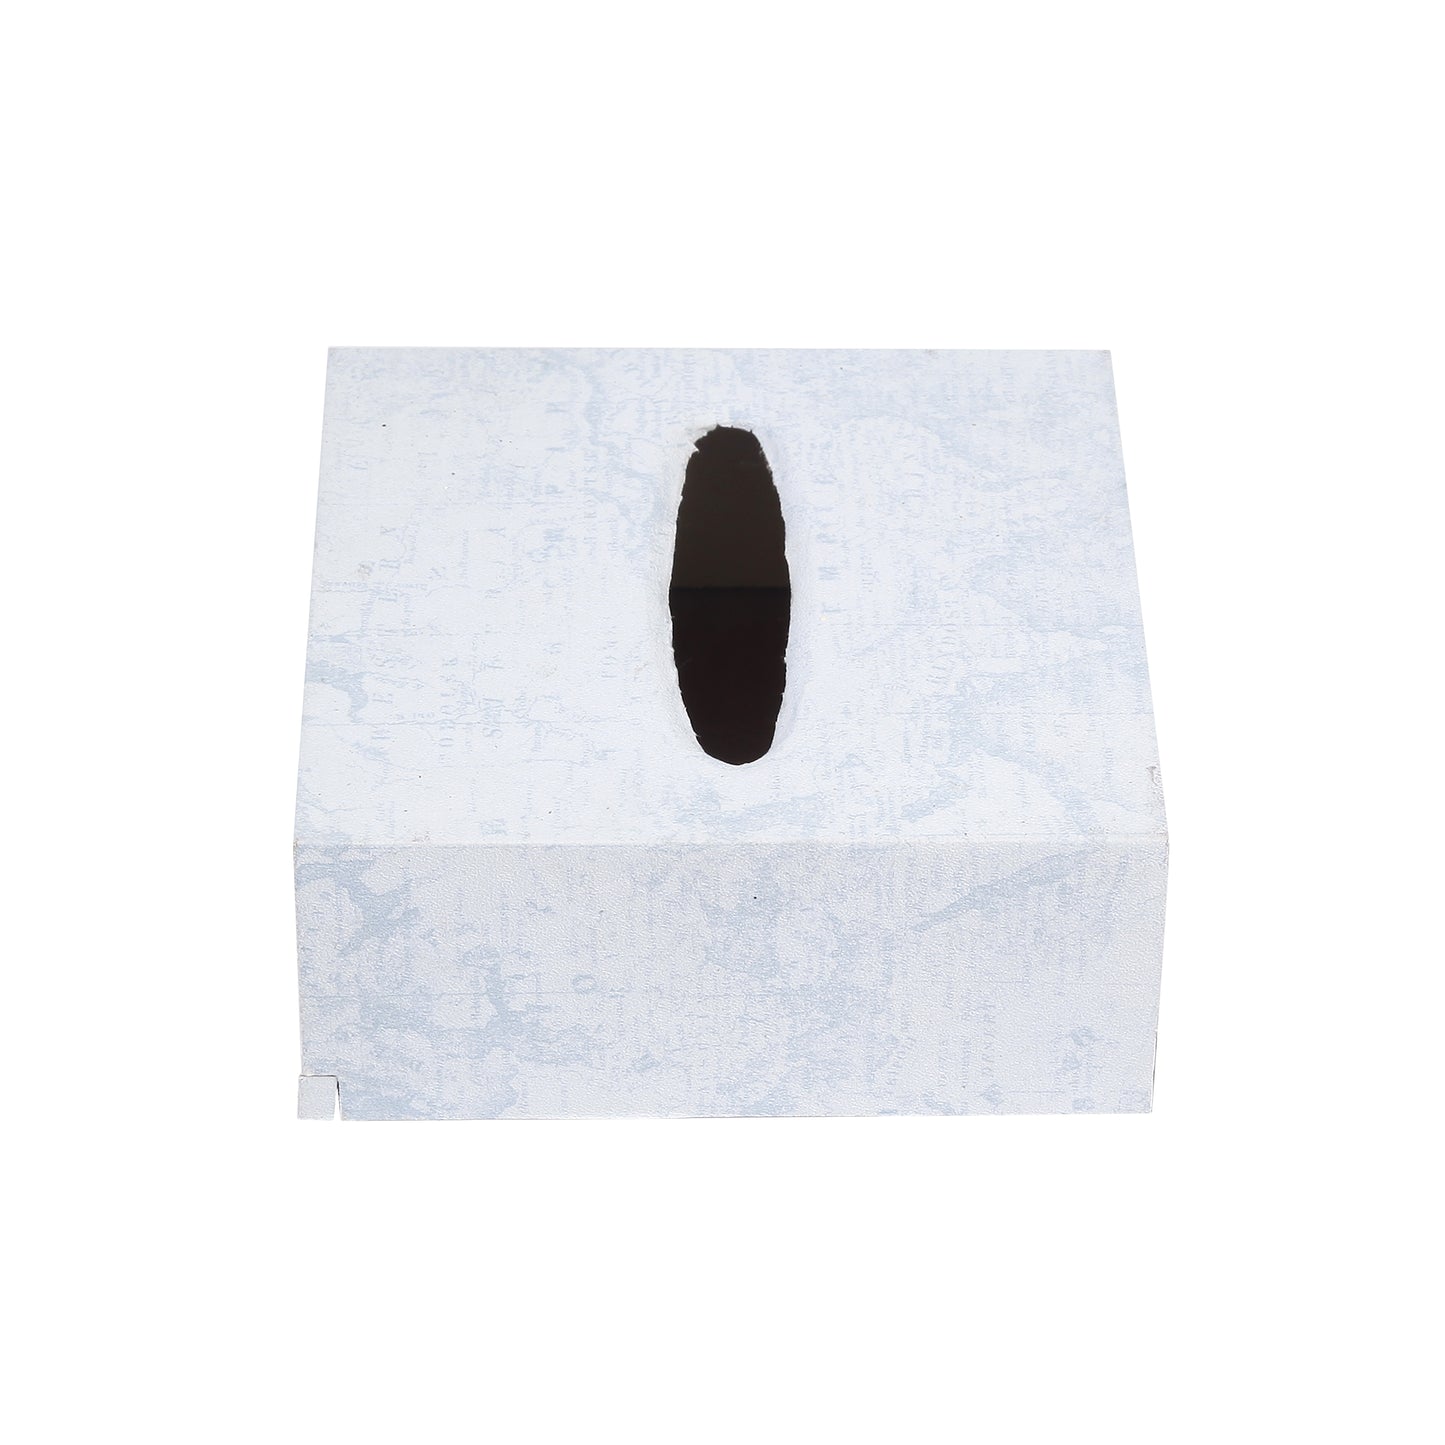 A Tiny Mistake Explorers Edition Square Tissue Box, 18 x 18 x 7.5 cm